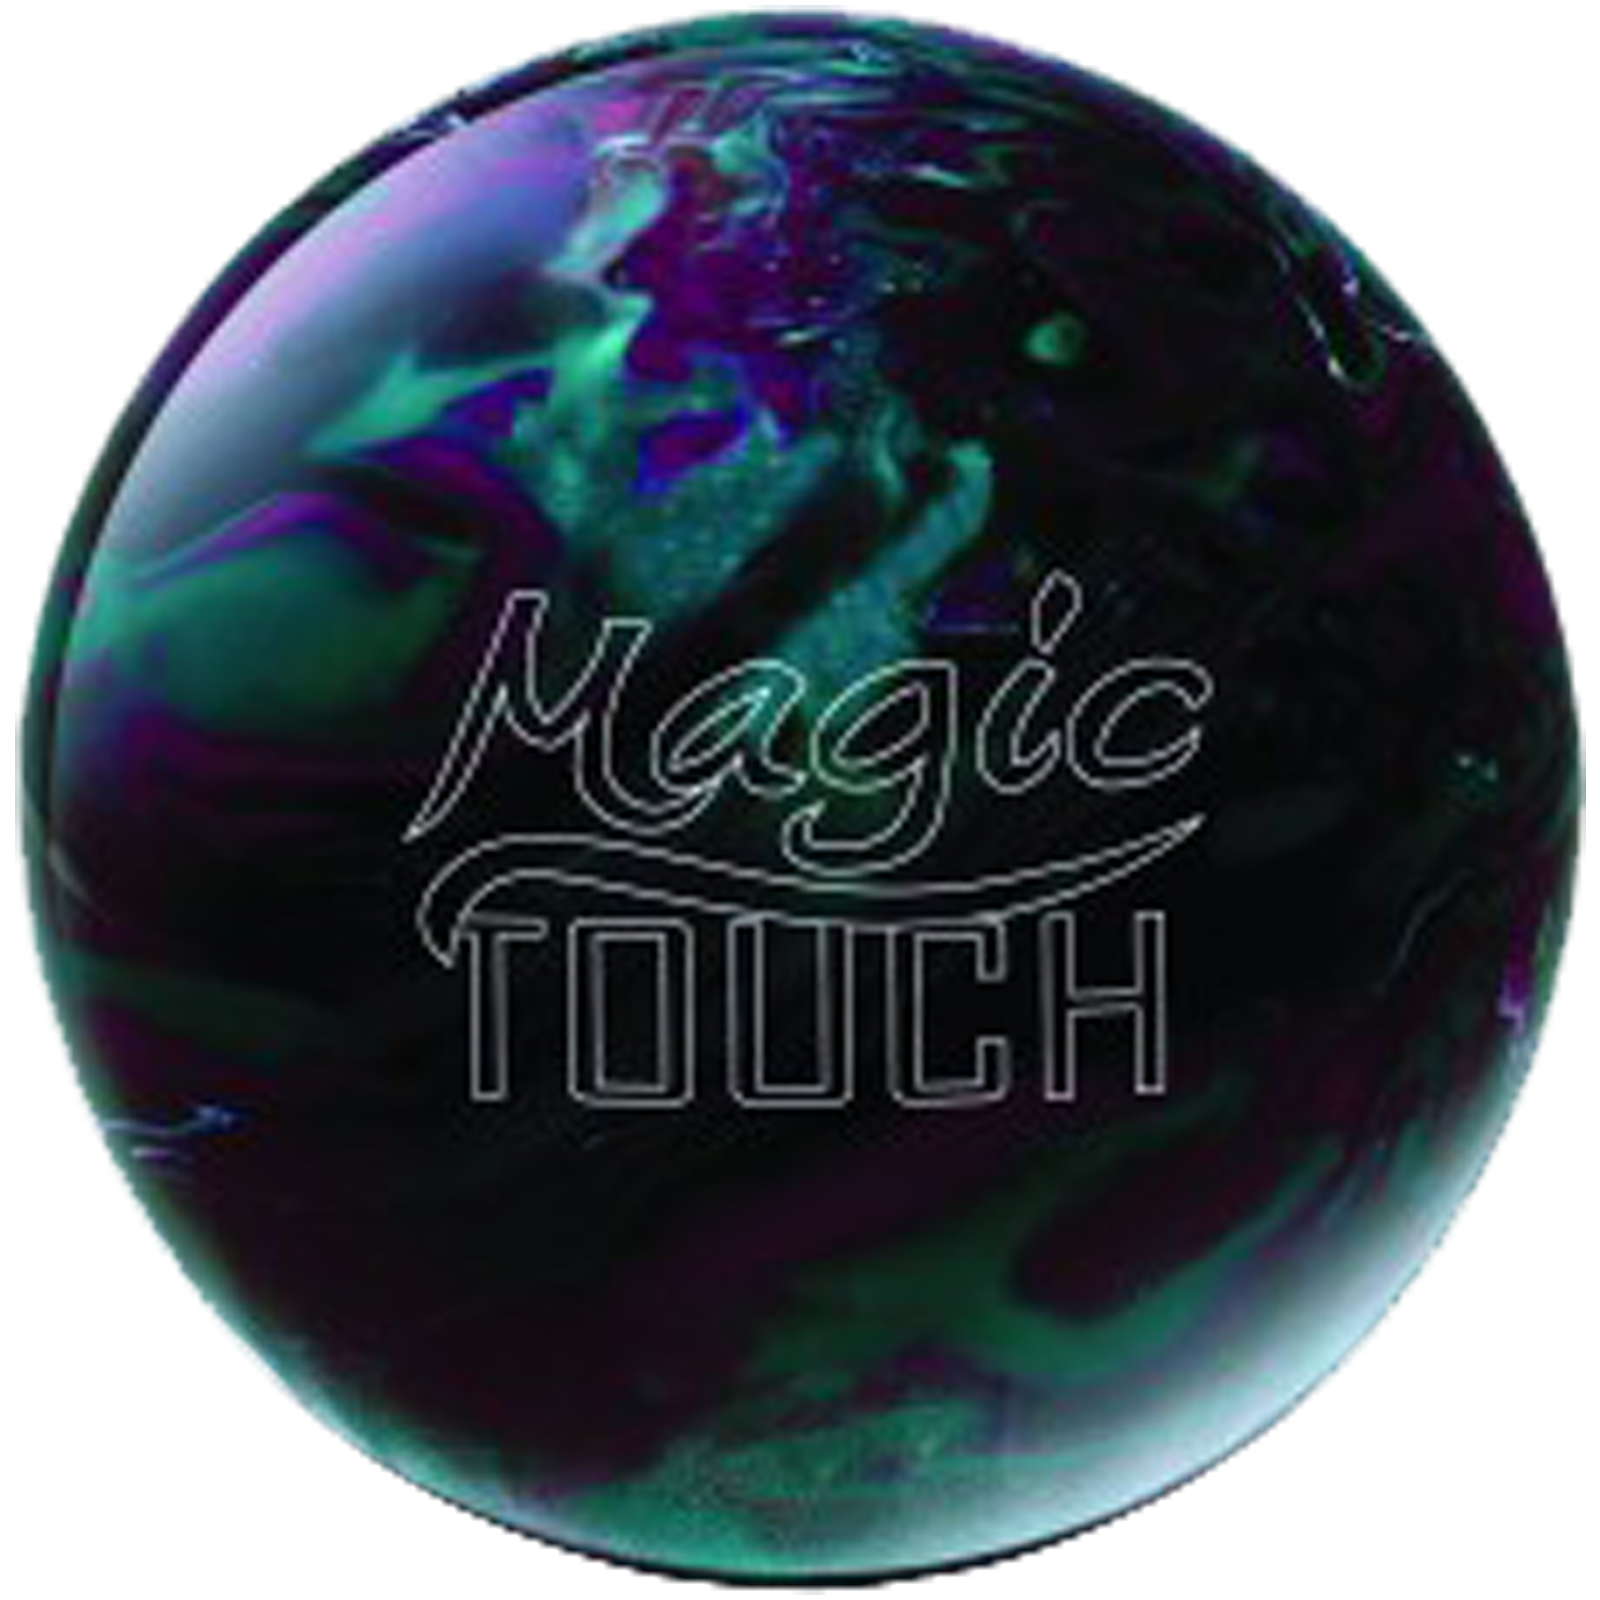 Magic Touch – Ebonite Bowling